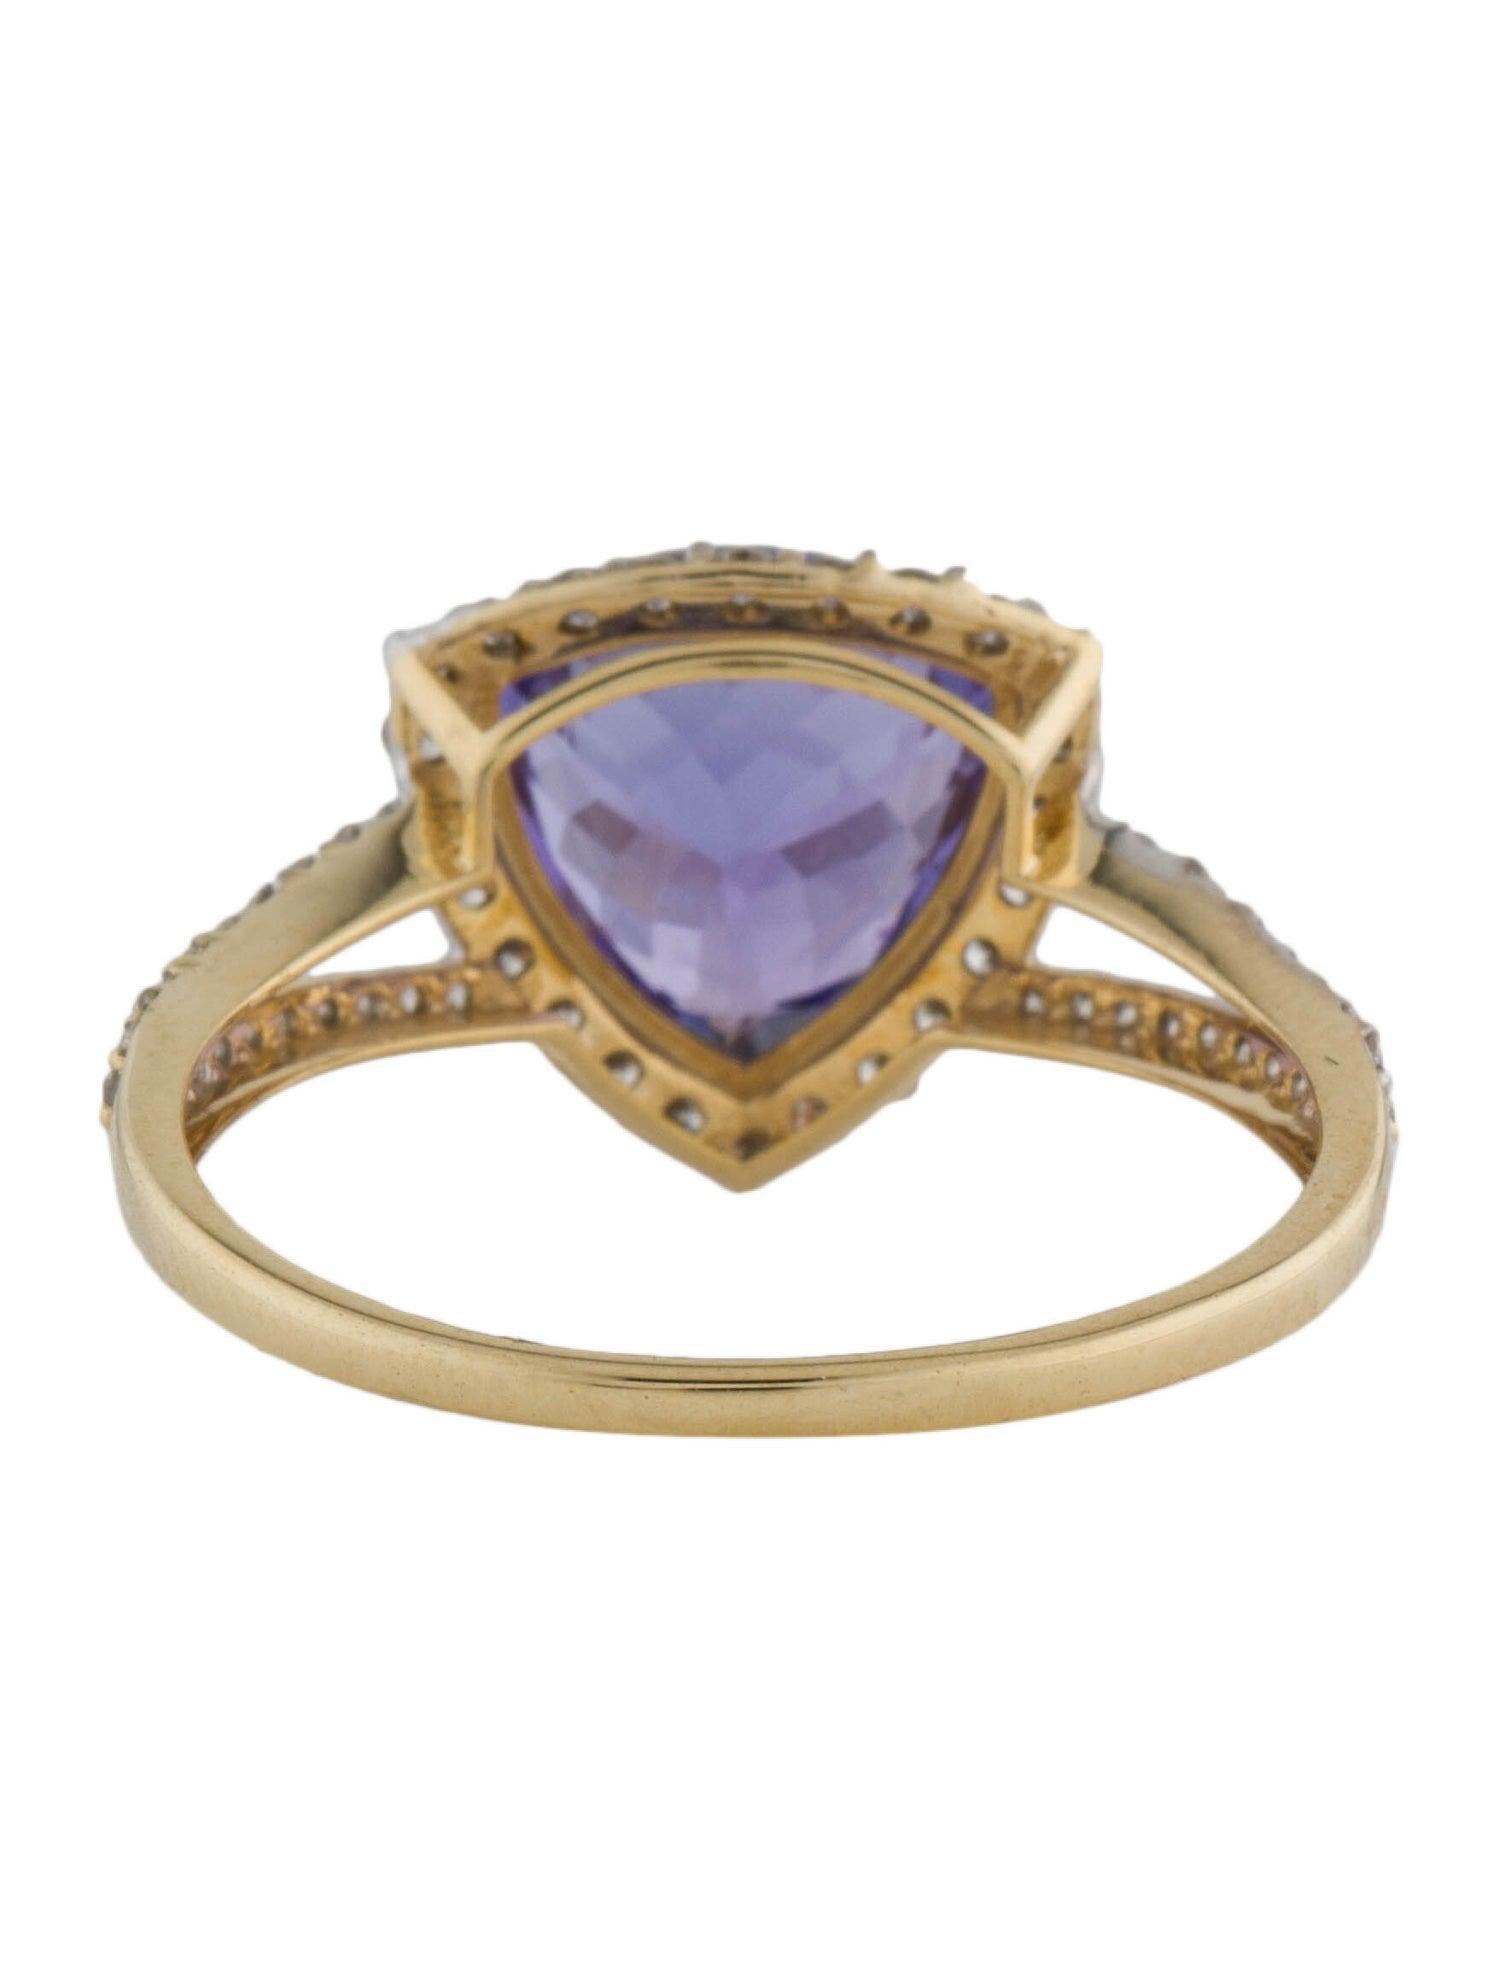 Trillion Cut Luxurious 14K Tanzanite & Diamond Cocktail Ring, Size 7.25 - Statement Jewelry For Sale